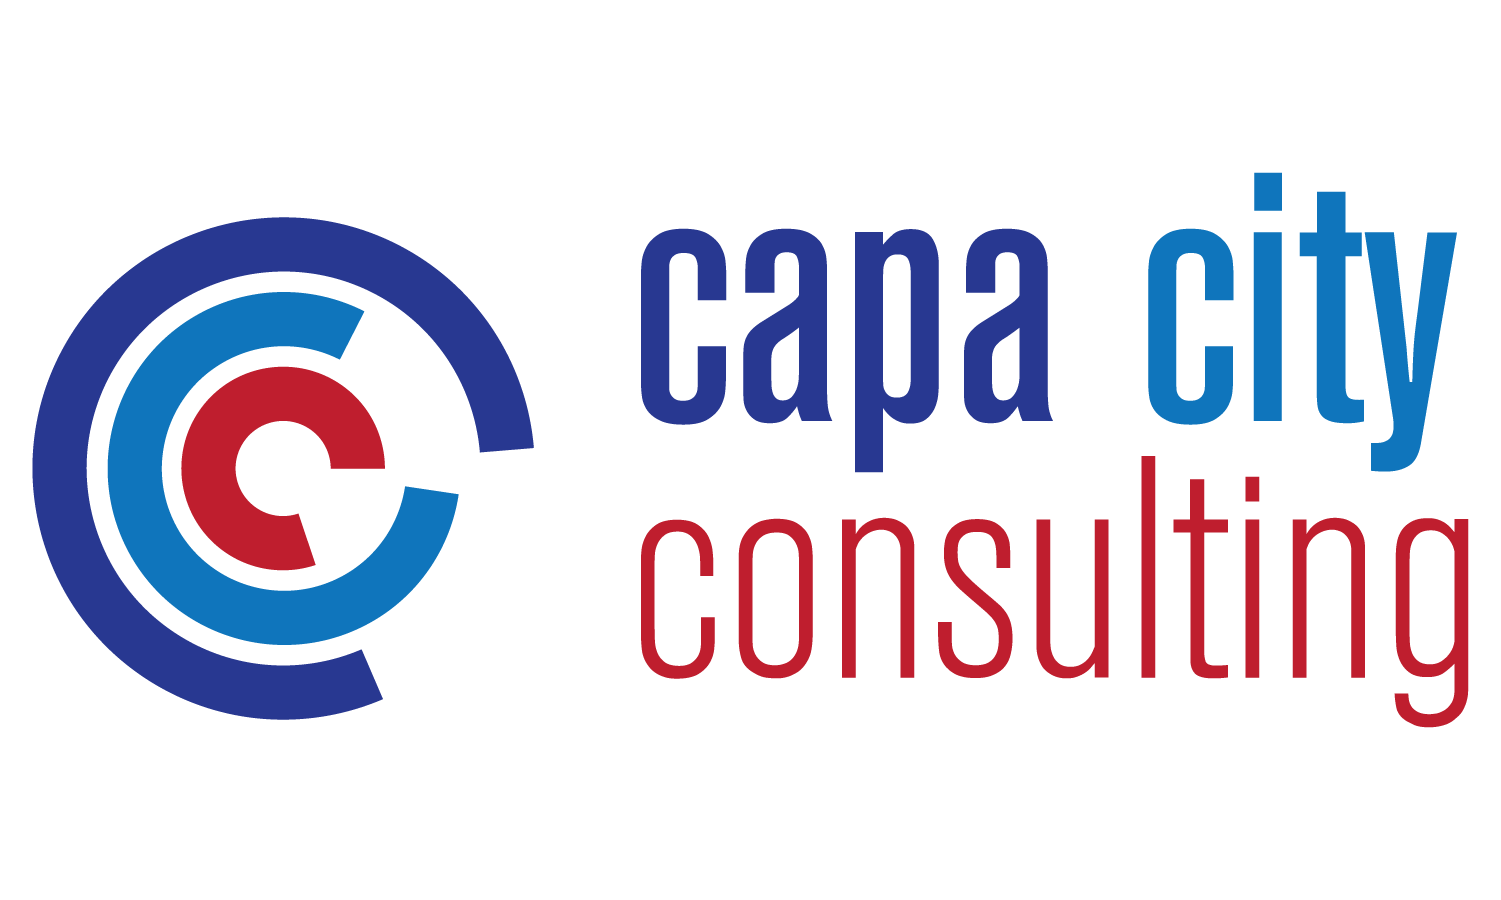 Capa City Consulting